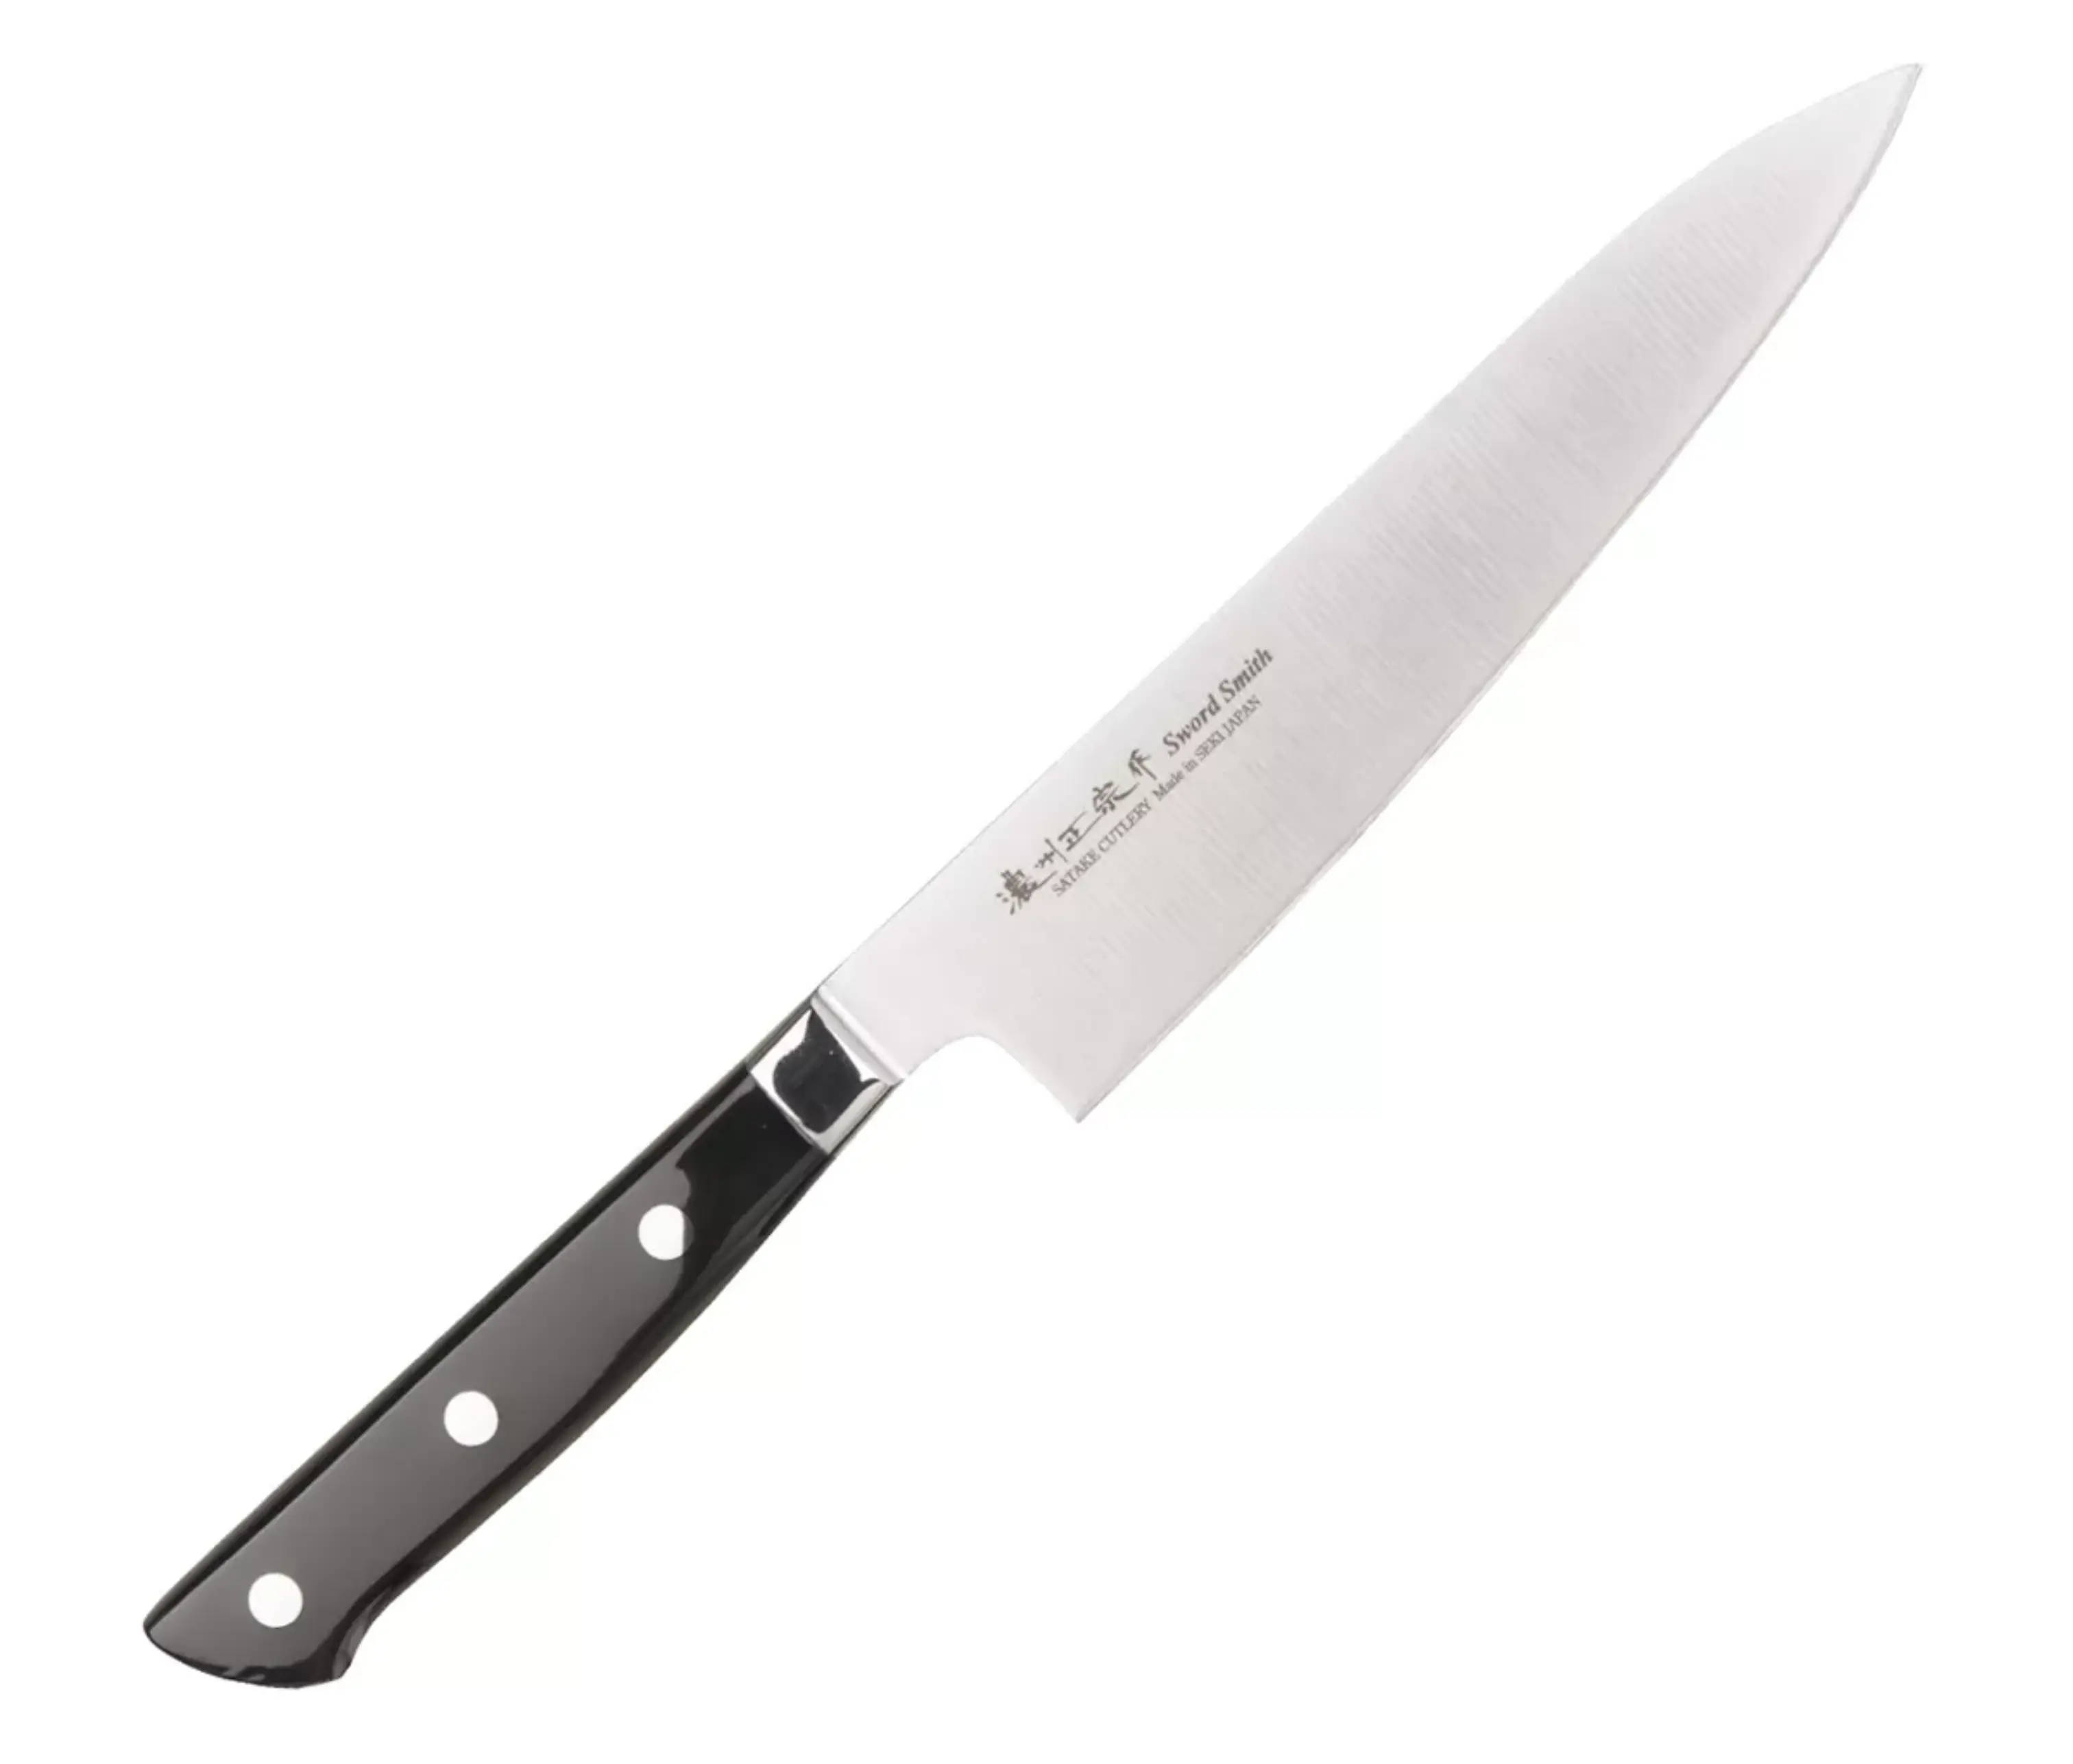 Нож кухонный Универсальный Satake "StainlessBolster" 150мм, сталь DSR1K6 58HRC ручка ABS пластик Япония